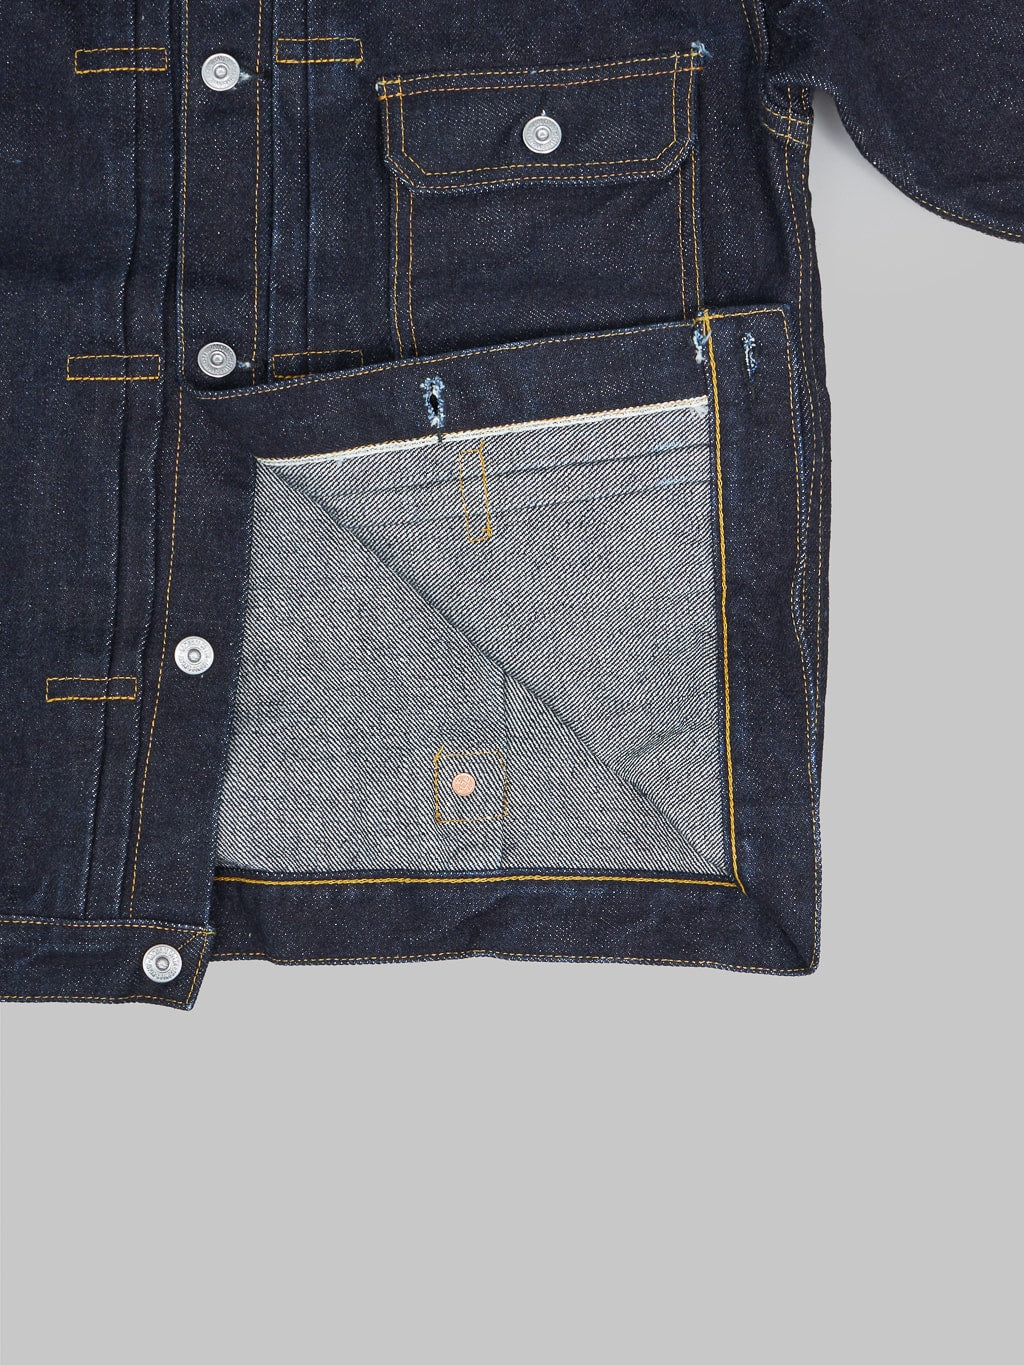 Samurai Jeans S551XX25oz 25th Limited Edition Type I Denim Jacket weft